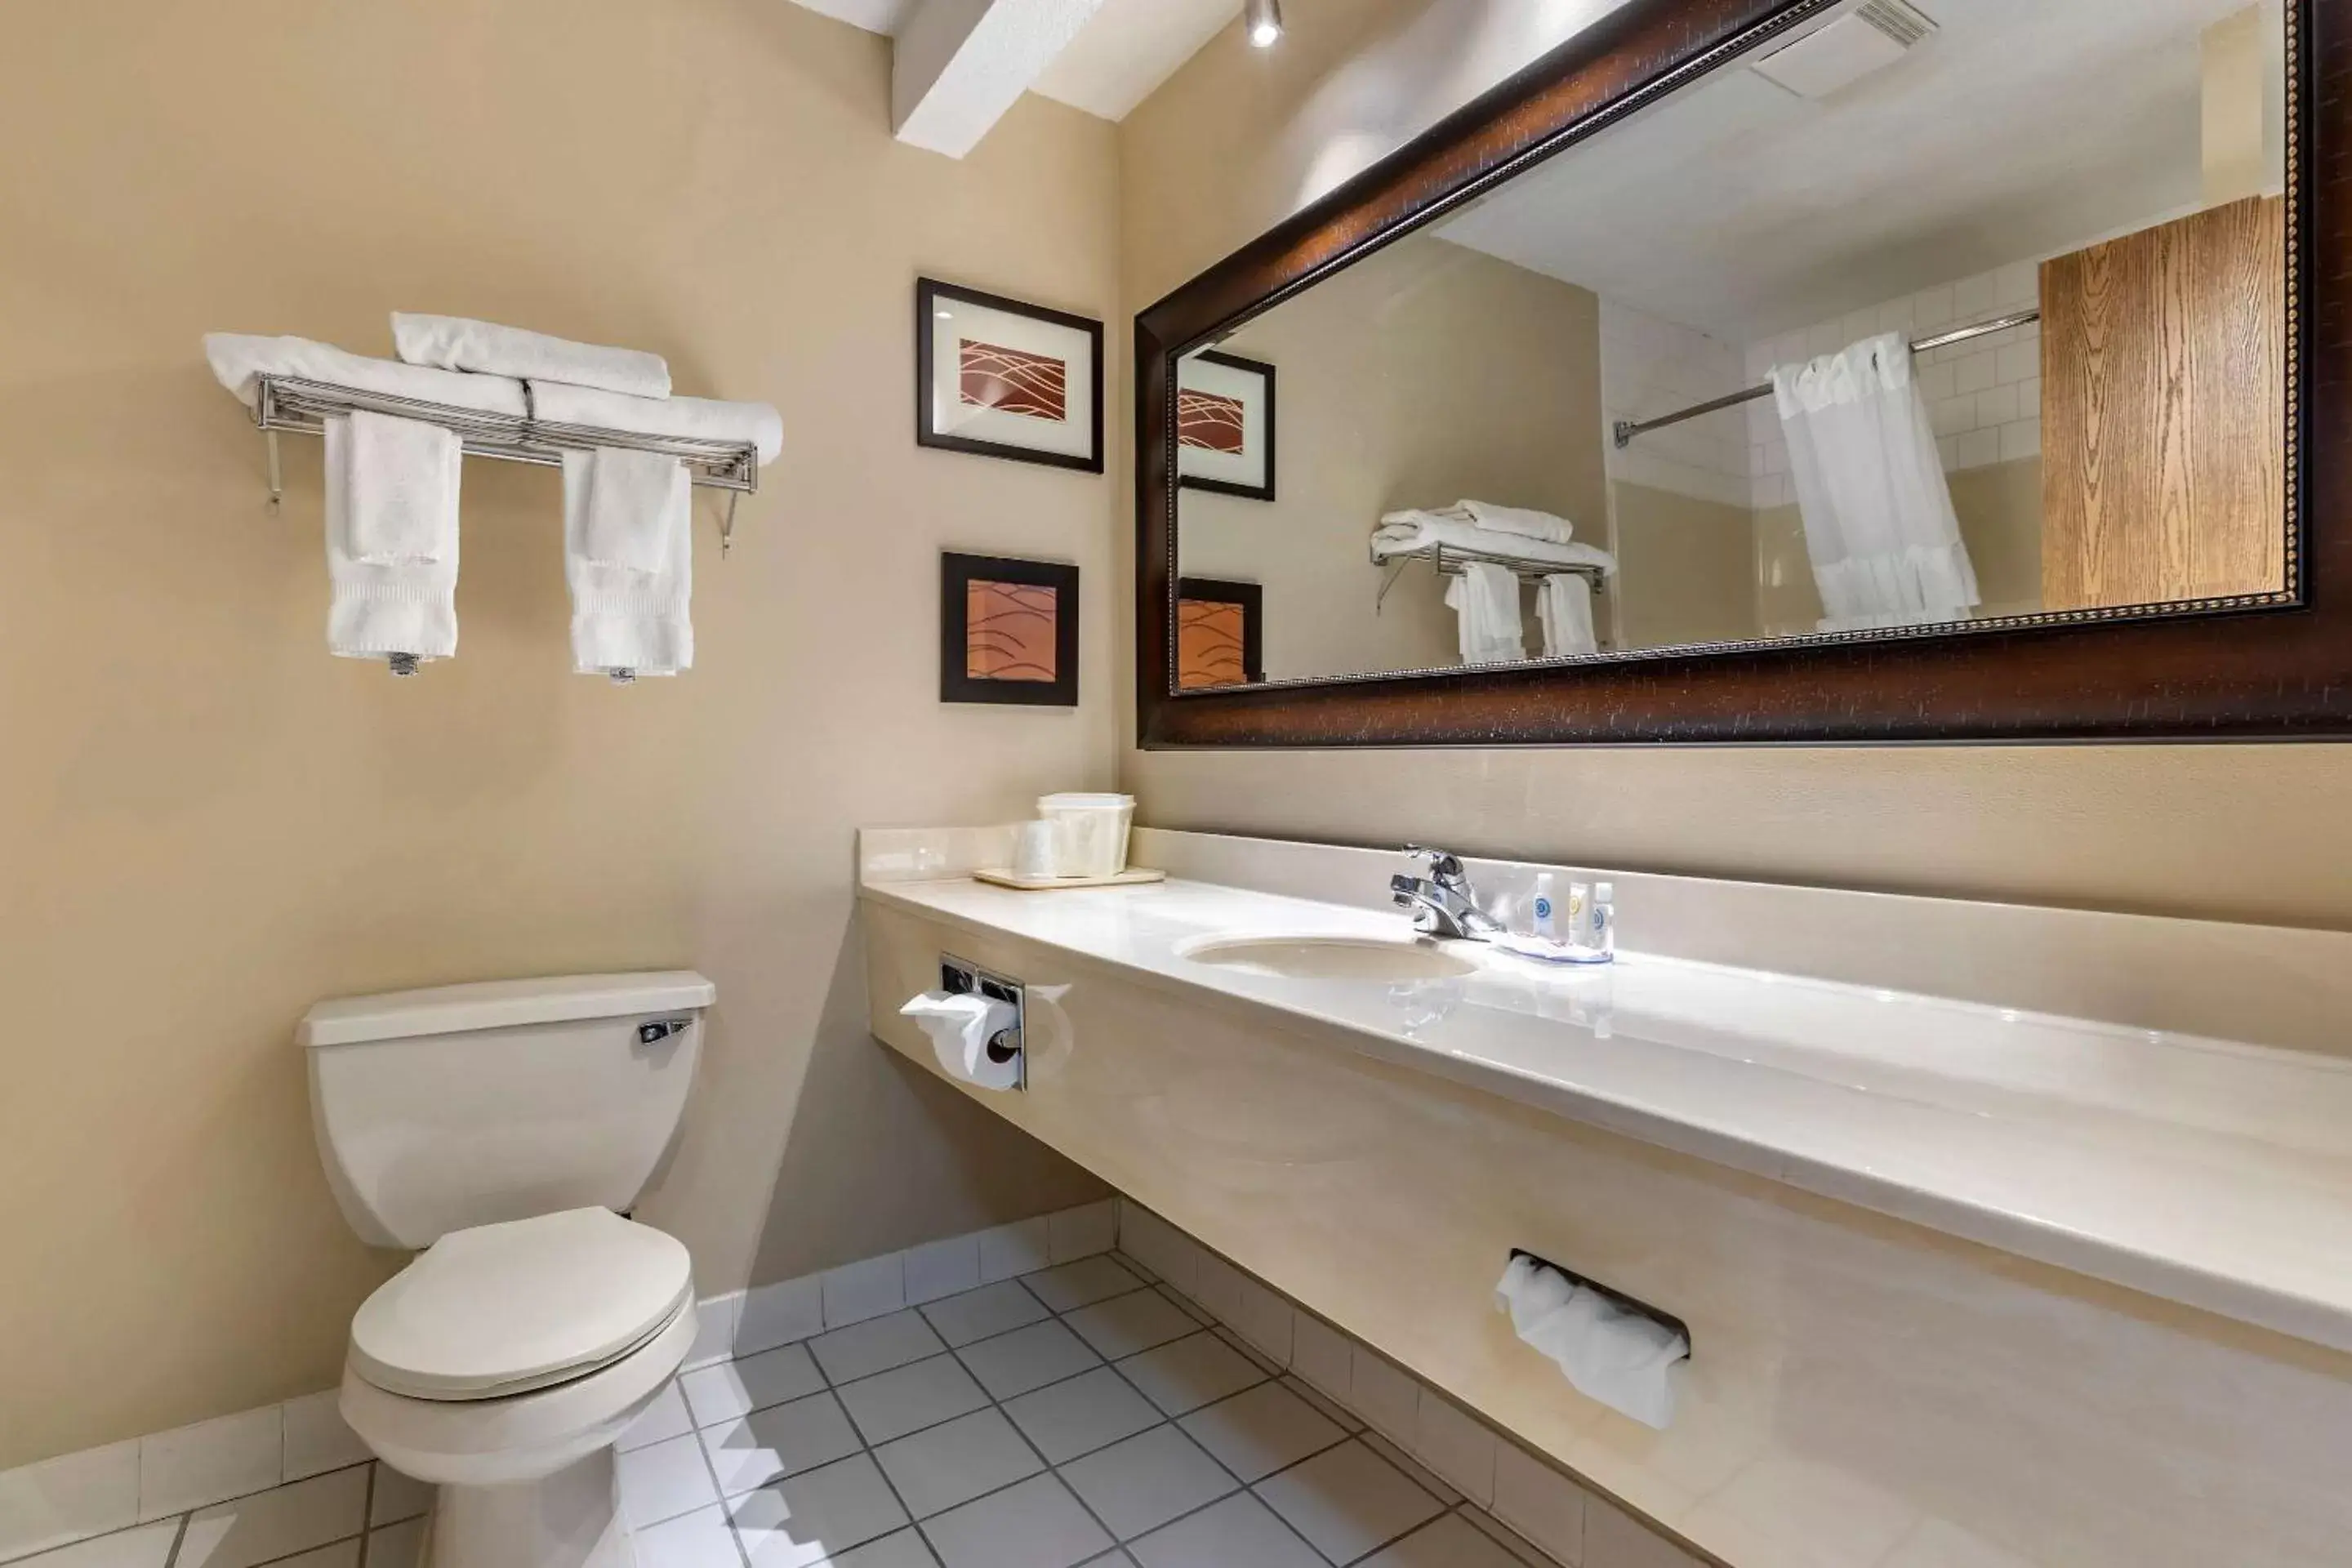 Bathroom in Comfort Inn Muscatine near Hwy 61